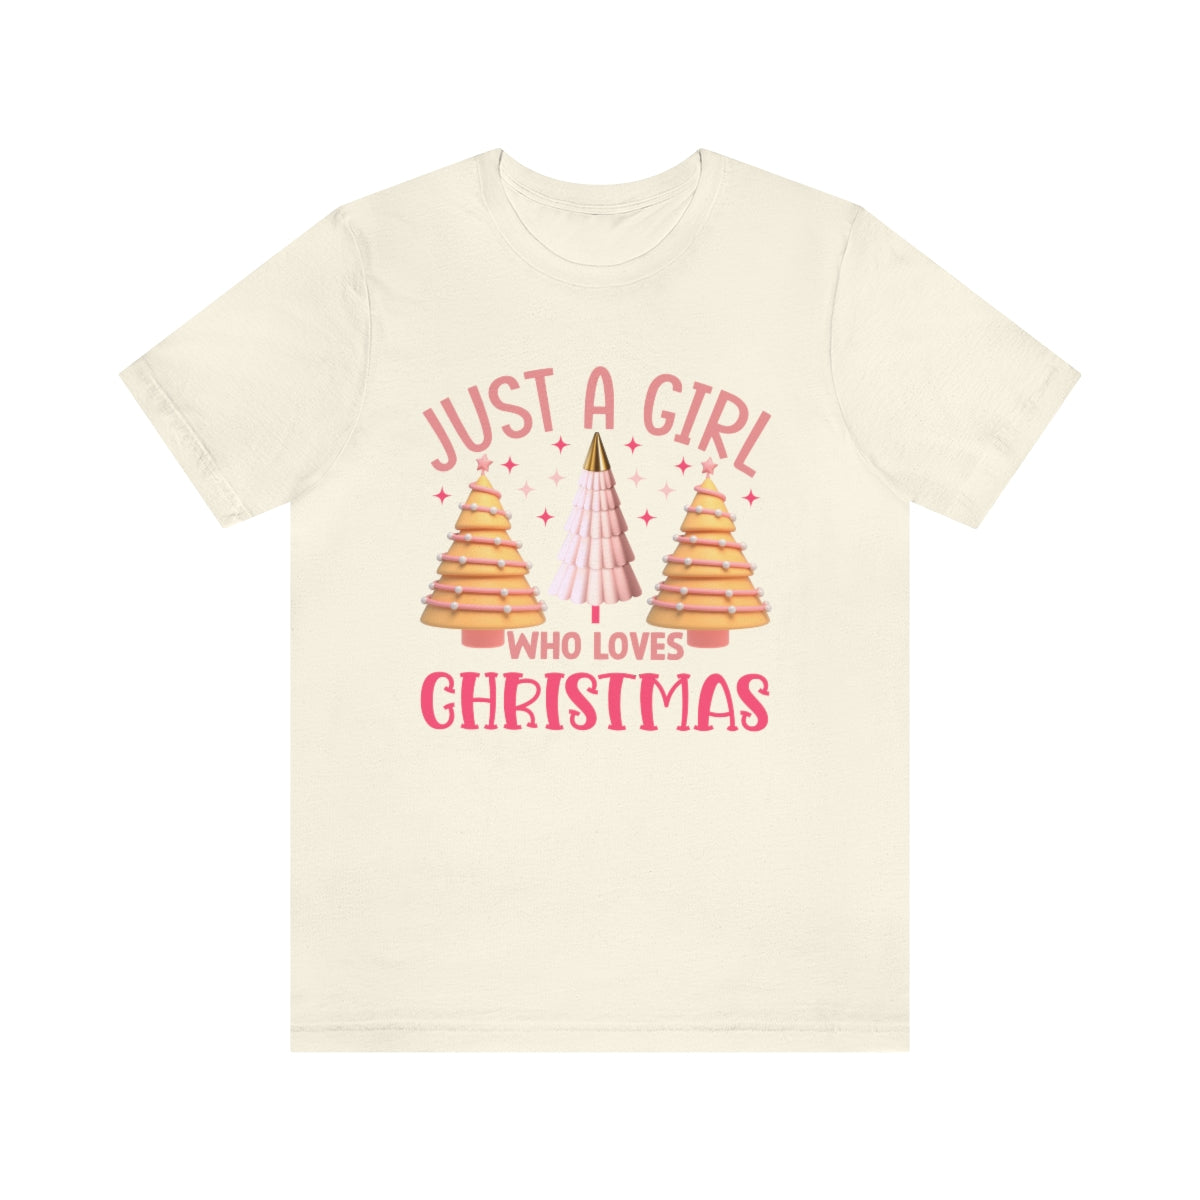 Just A Girl Christmas T-Shirt